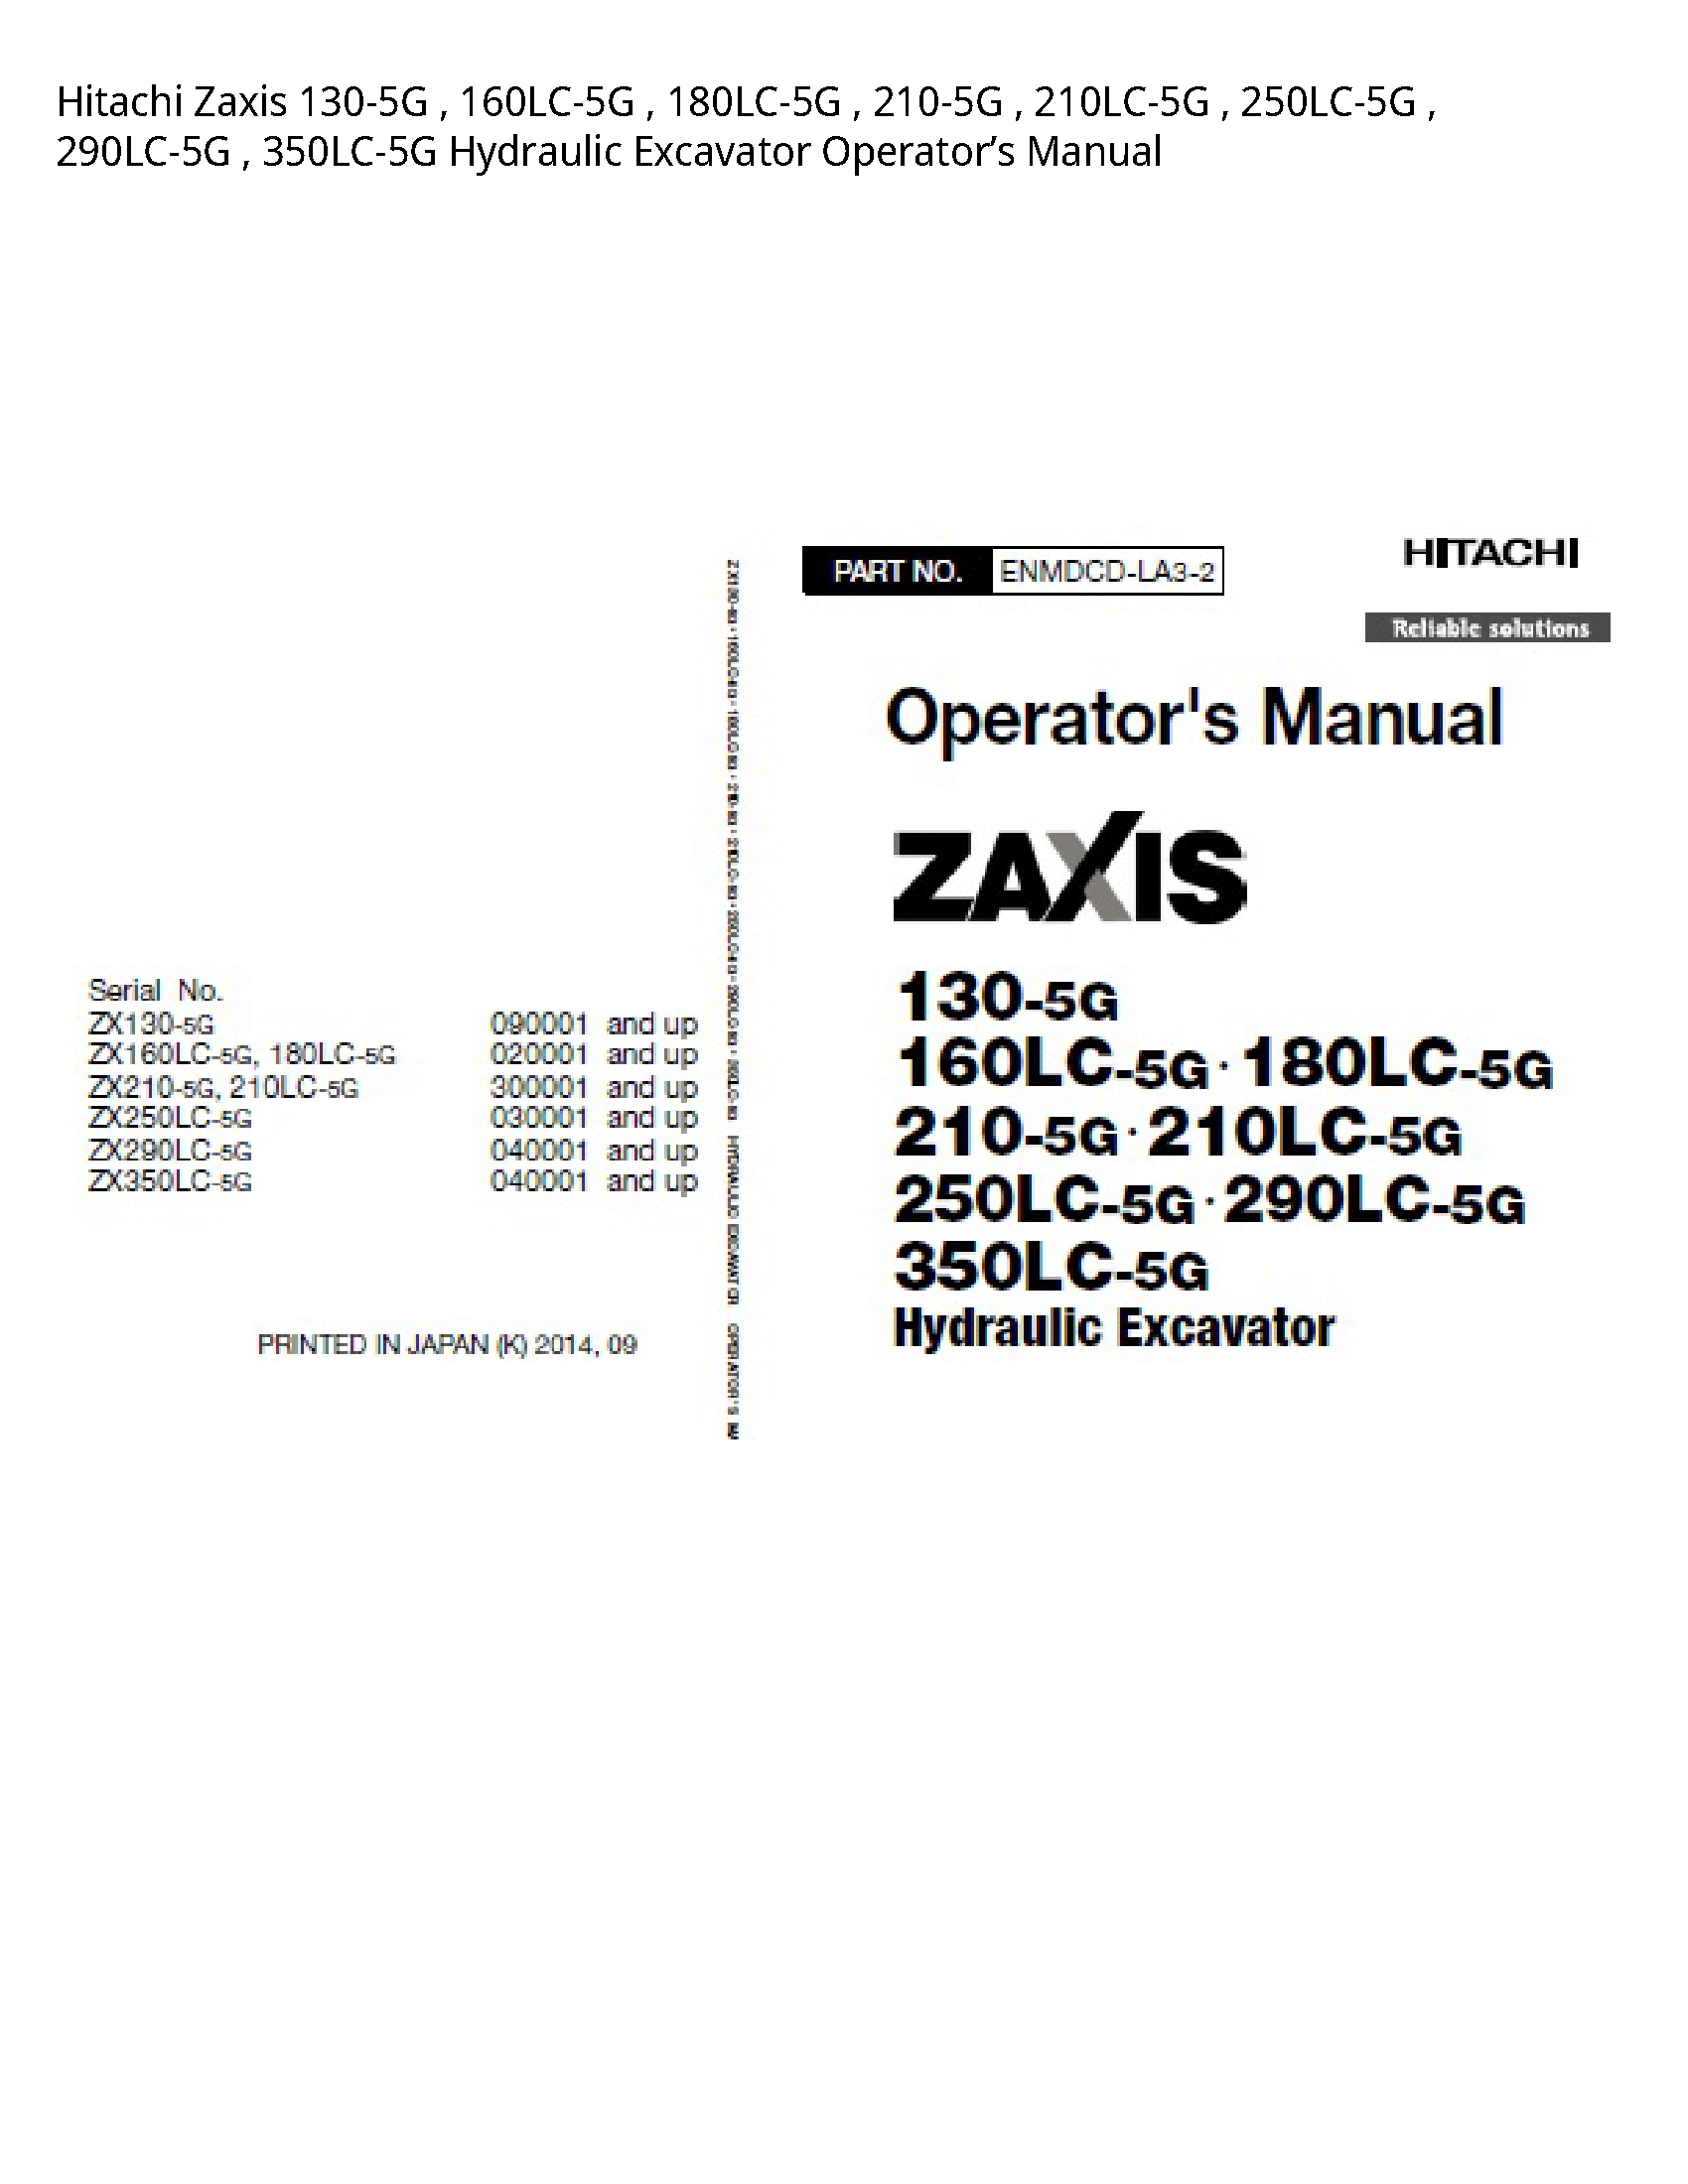 Hitachi 130-5G Zaxis Hydraulic Excavator Operator’s manual